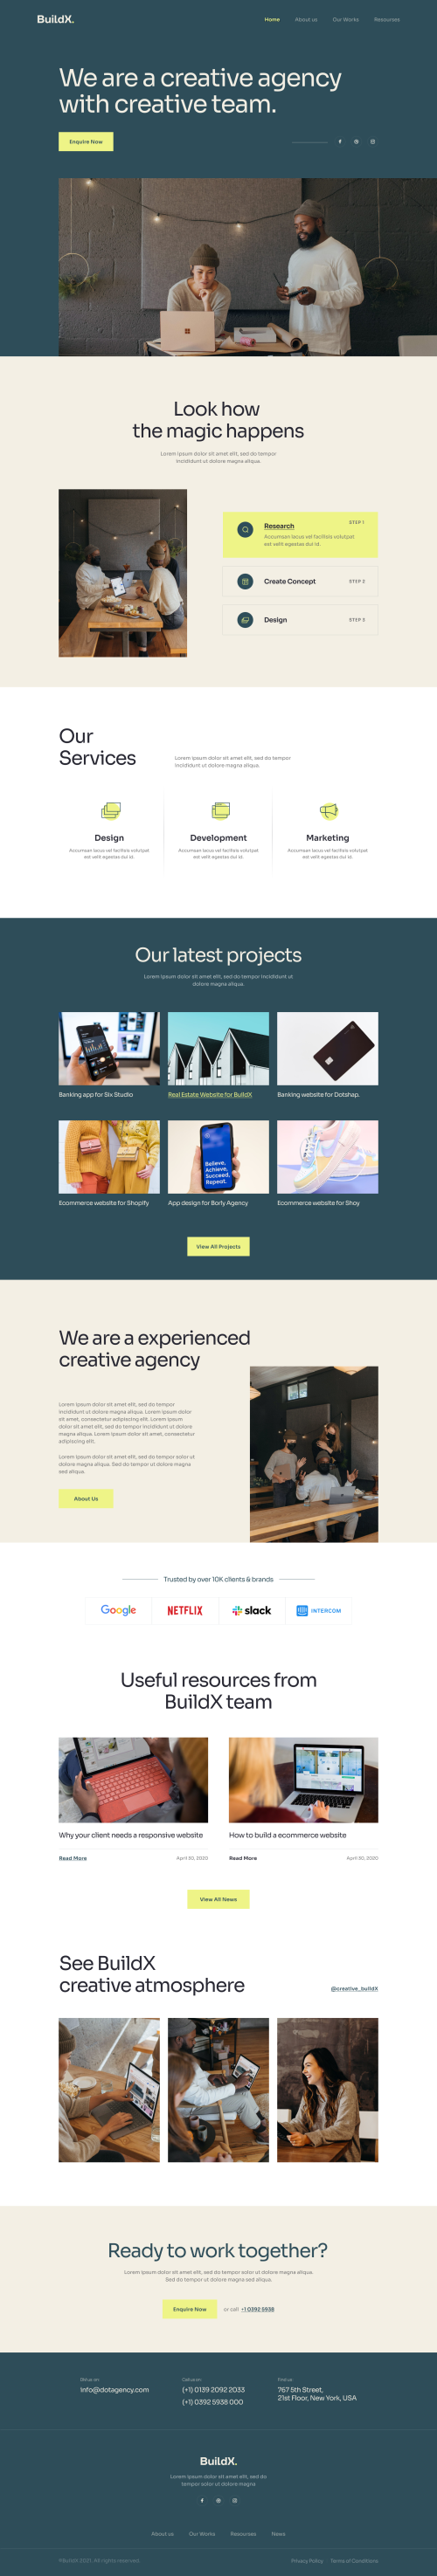 UIHut - Minimal Creative Agency Websites BuildX. - 17335